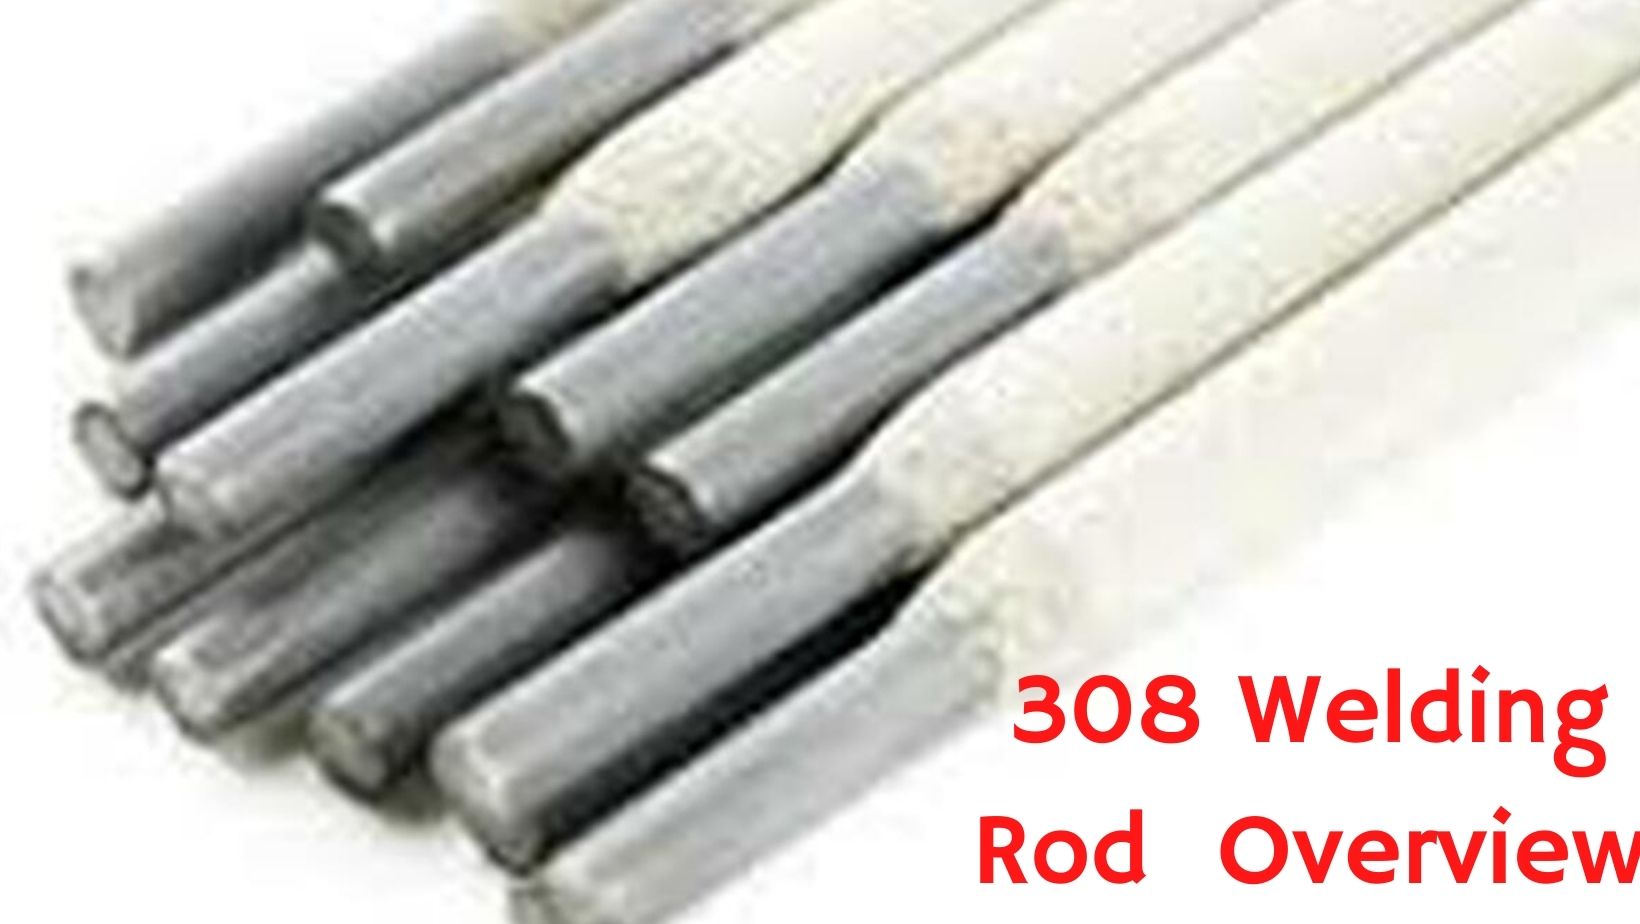 308 welding rod